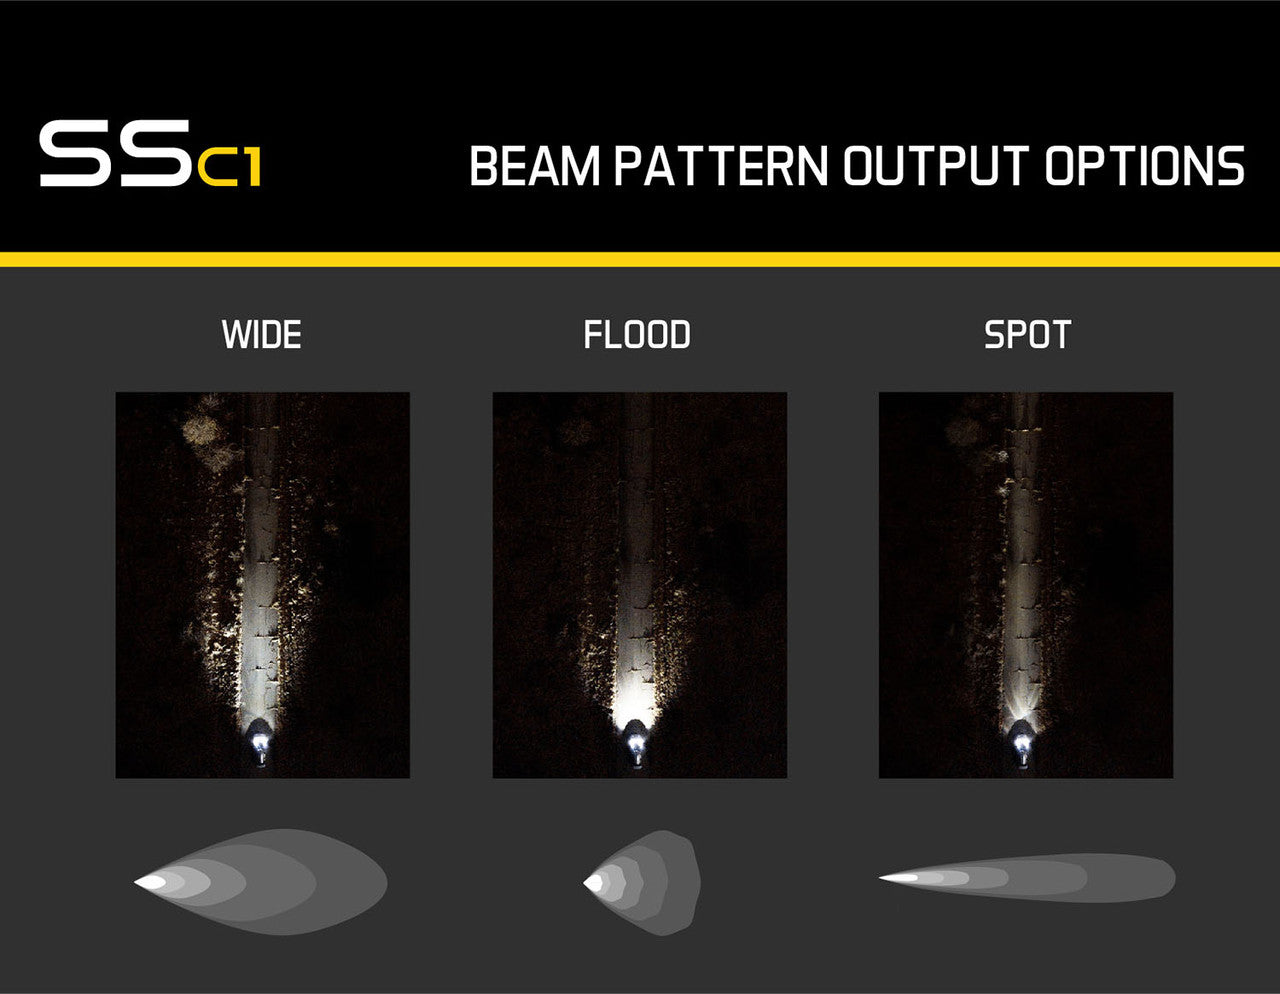 Diode Dynamics Stage Series C1 LED Pod Sport White Flood Standard BBL Pair